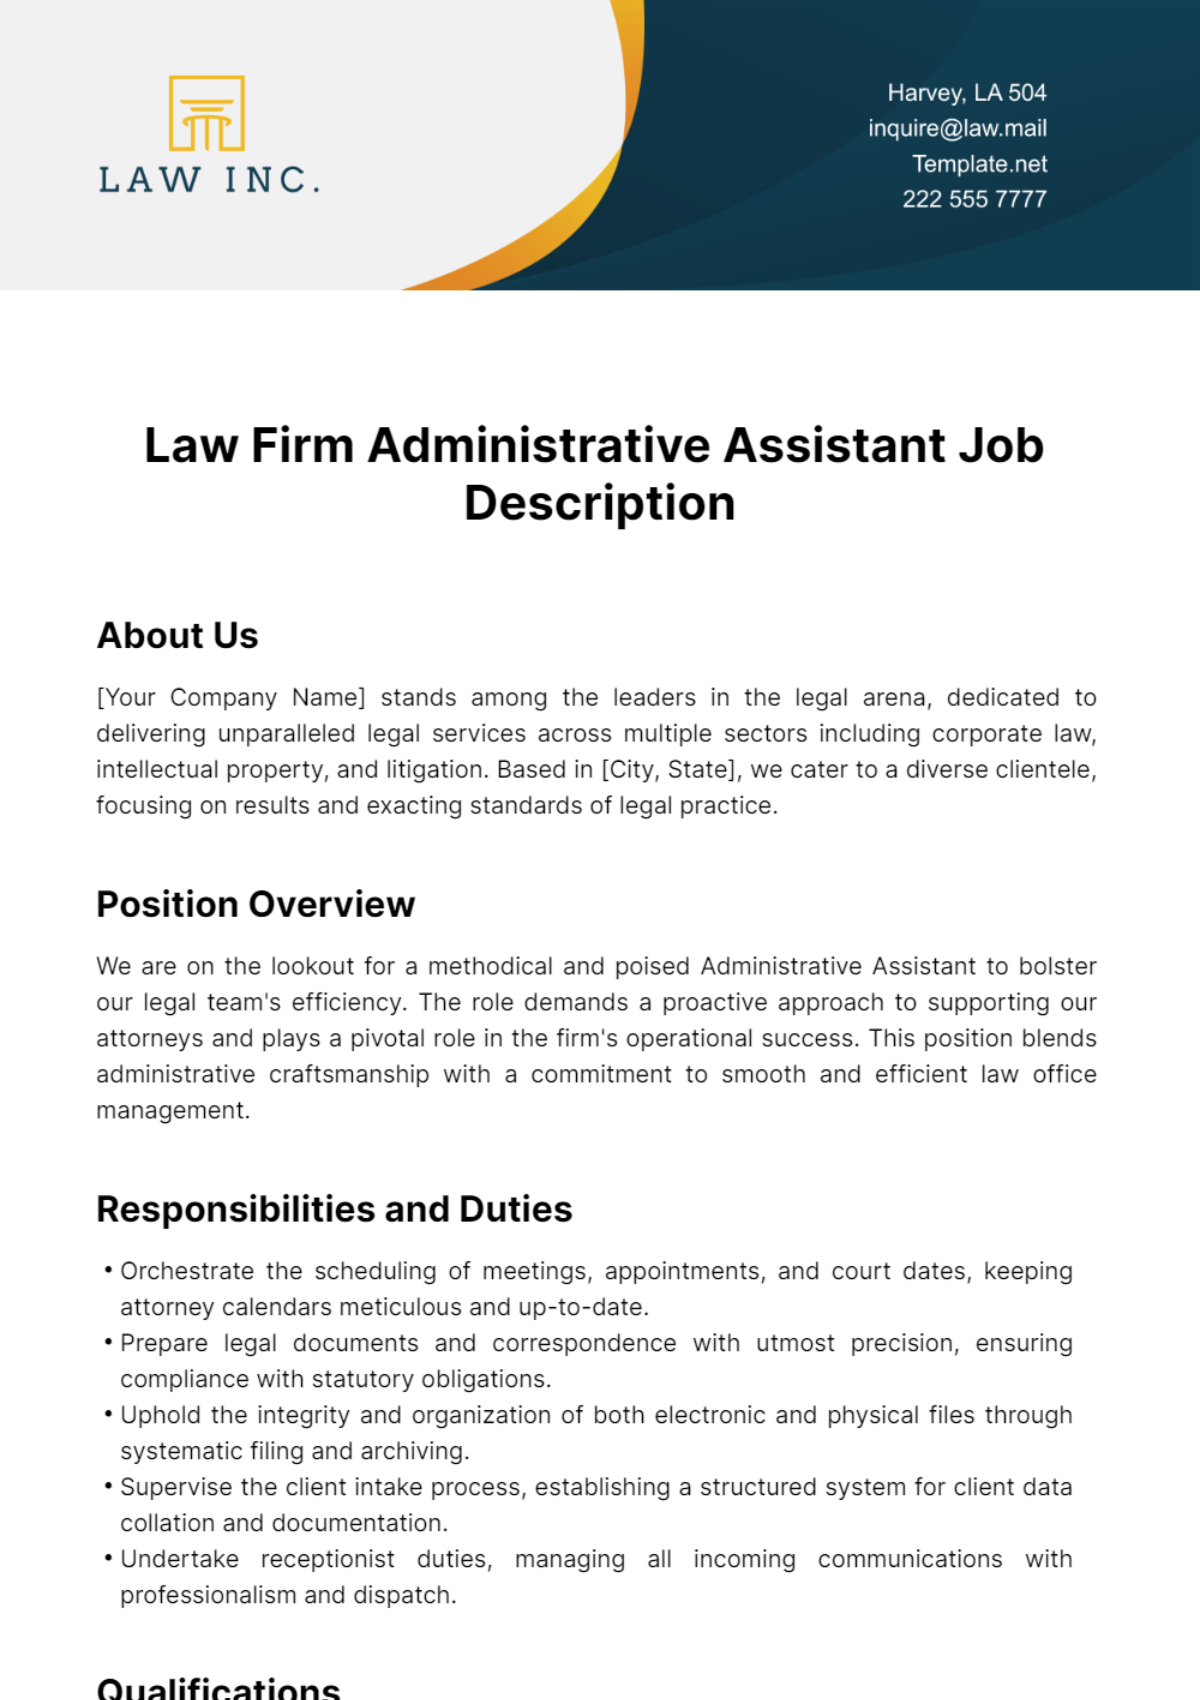 Free Law Firm Administrative Assistant Job Description Template